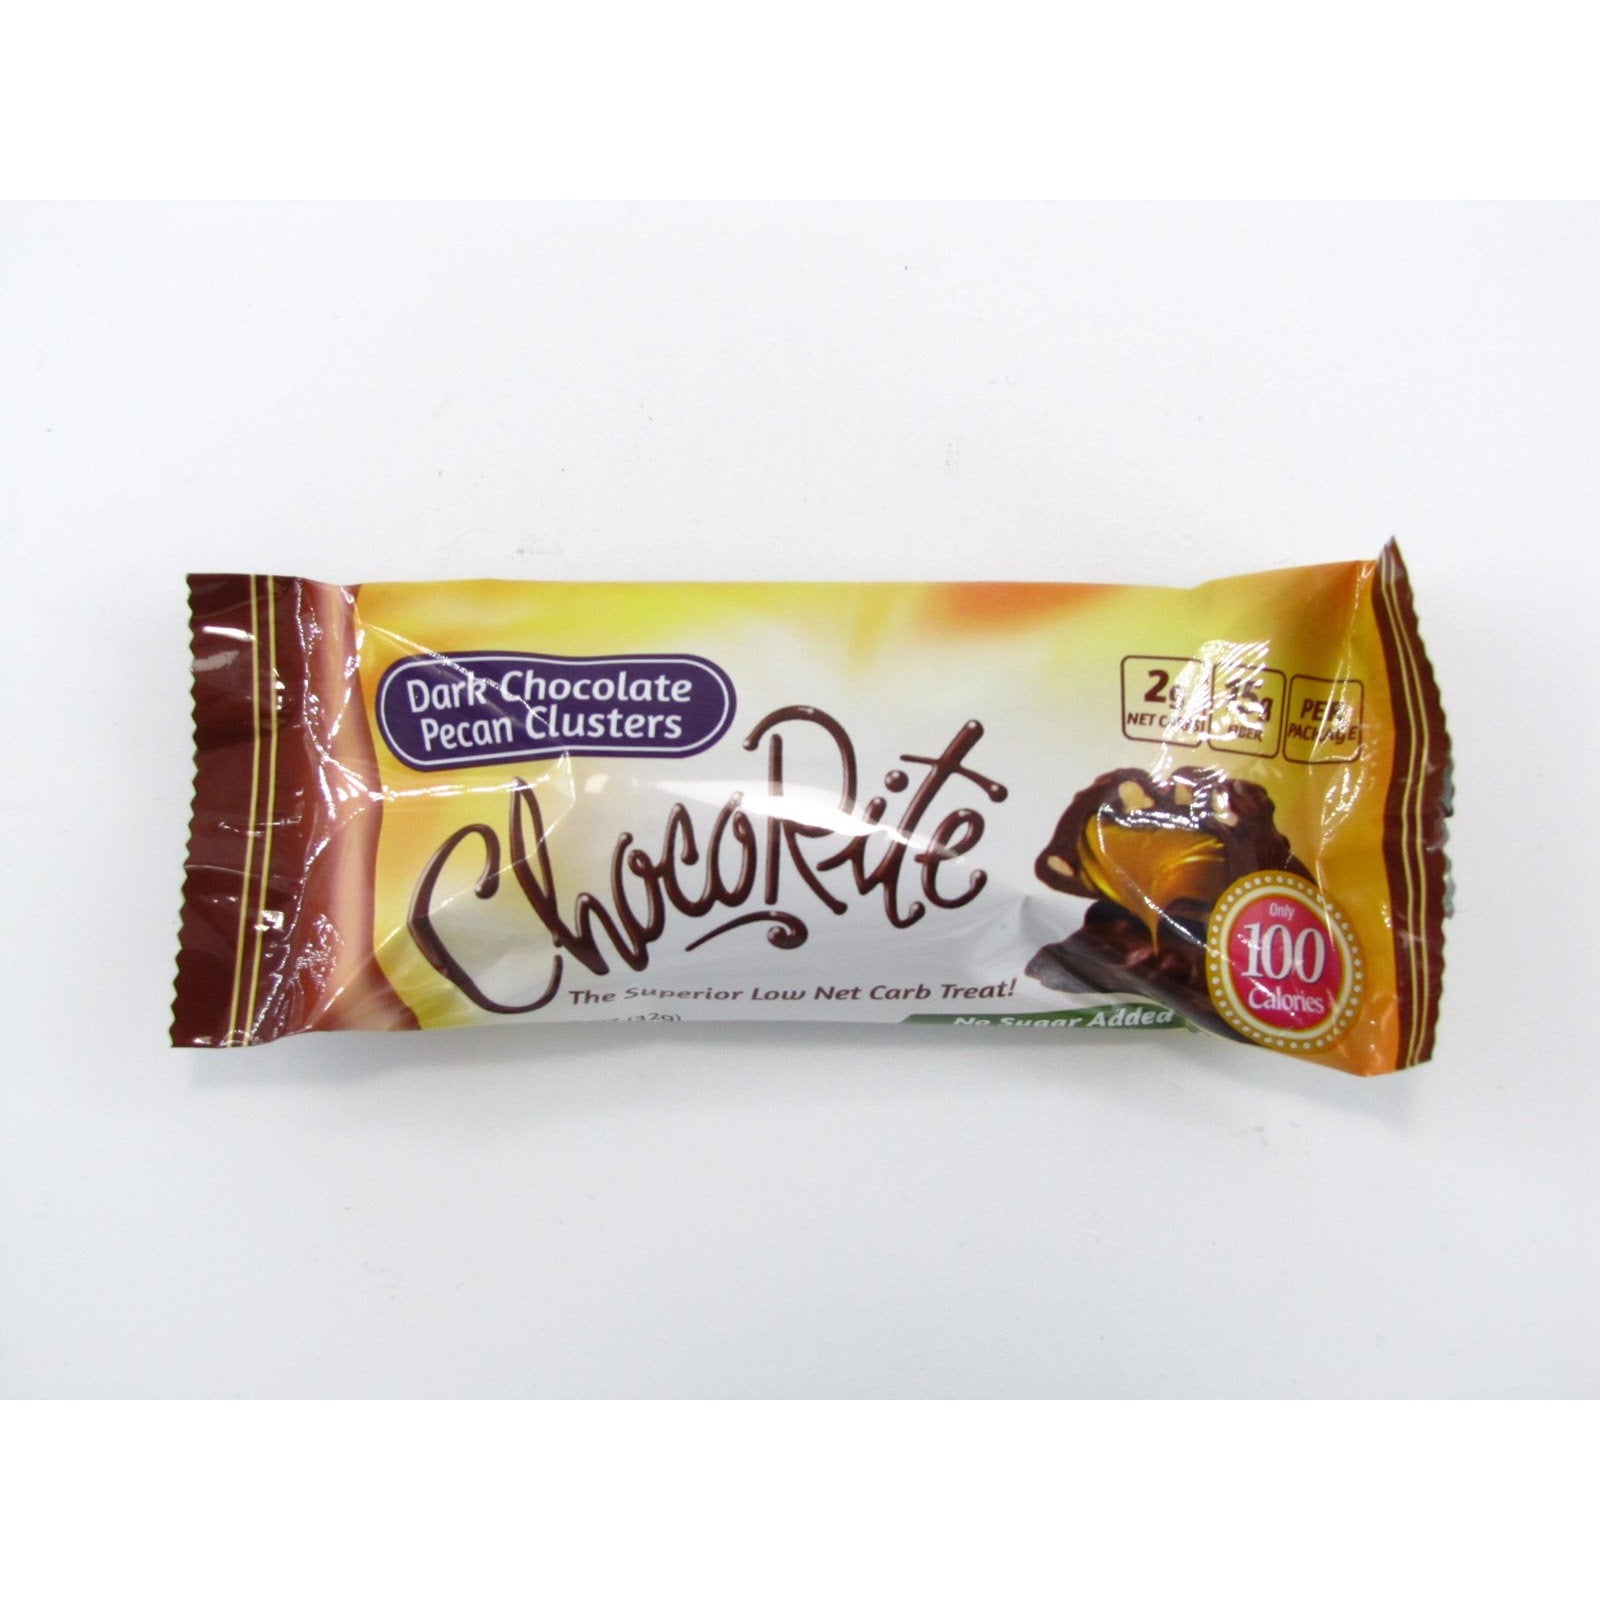 ChocoRite Low Carb KETO Candy Bars Chocolate (1 bar) Protein Snacks Dark Chocolate Pecan Clusters BEST BY 11/2021 ChocoRite